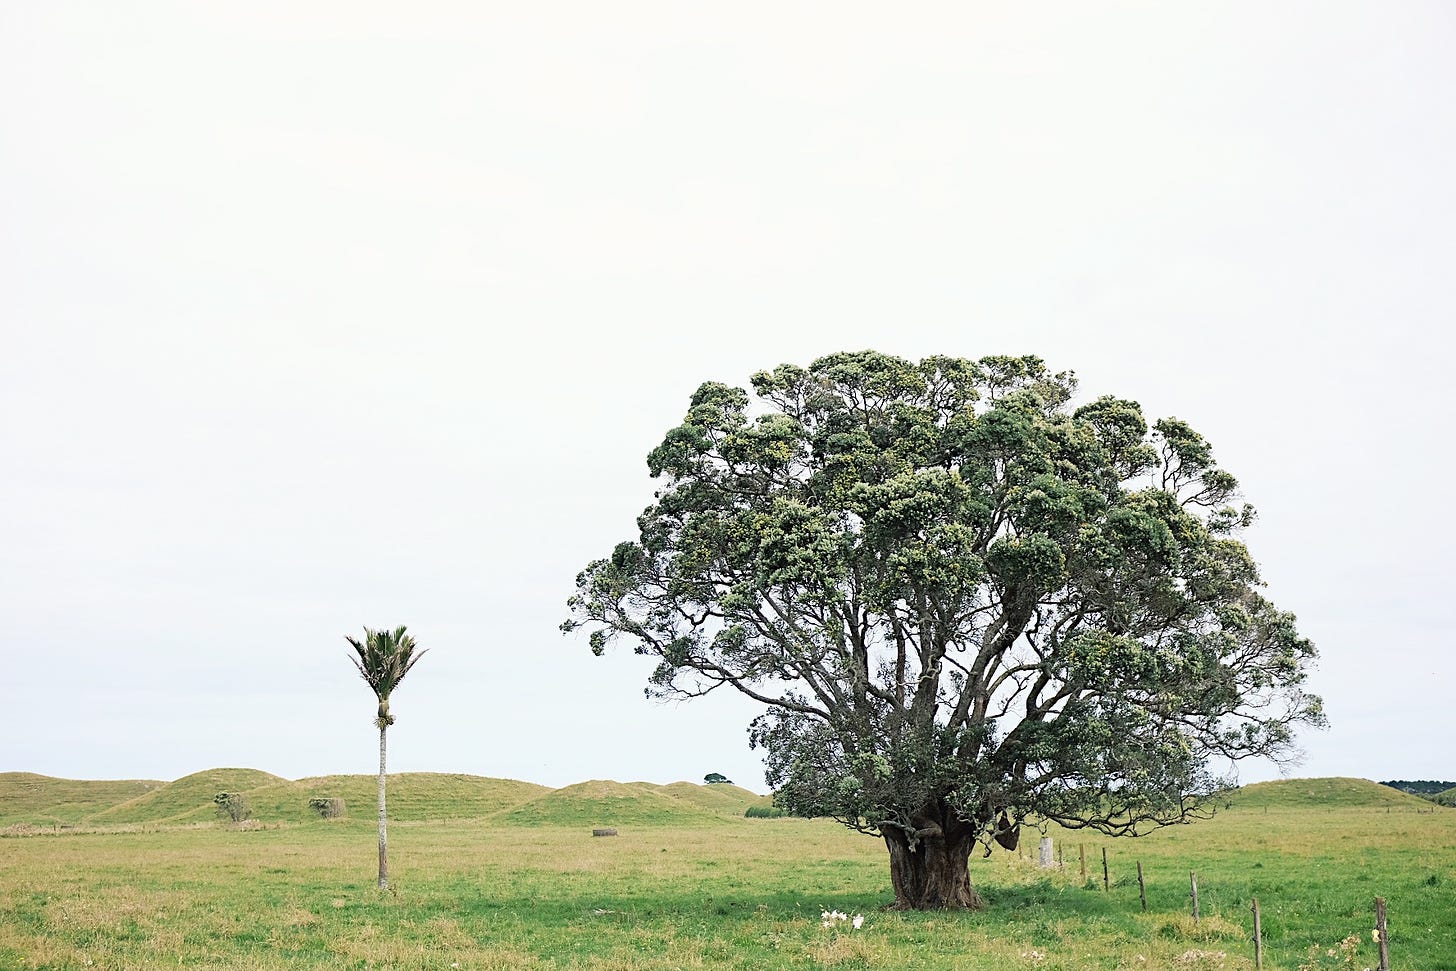 Against an overcast sky a single tī kouka (cabbage tree) stands next to a single pōhutukawa tree. The trees are alone in a green field with small hummocks. The location is near Parihaka, Taranaki